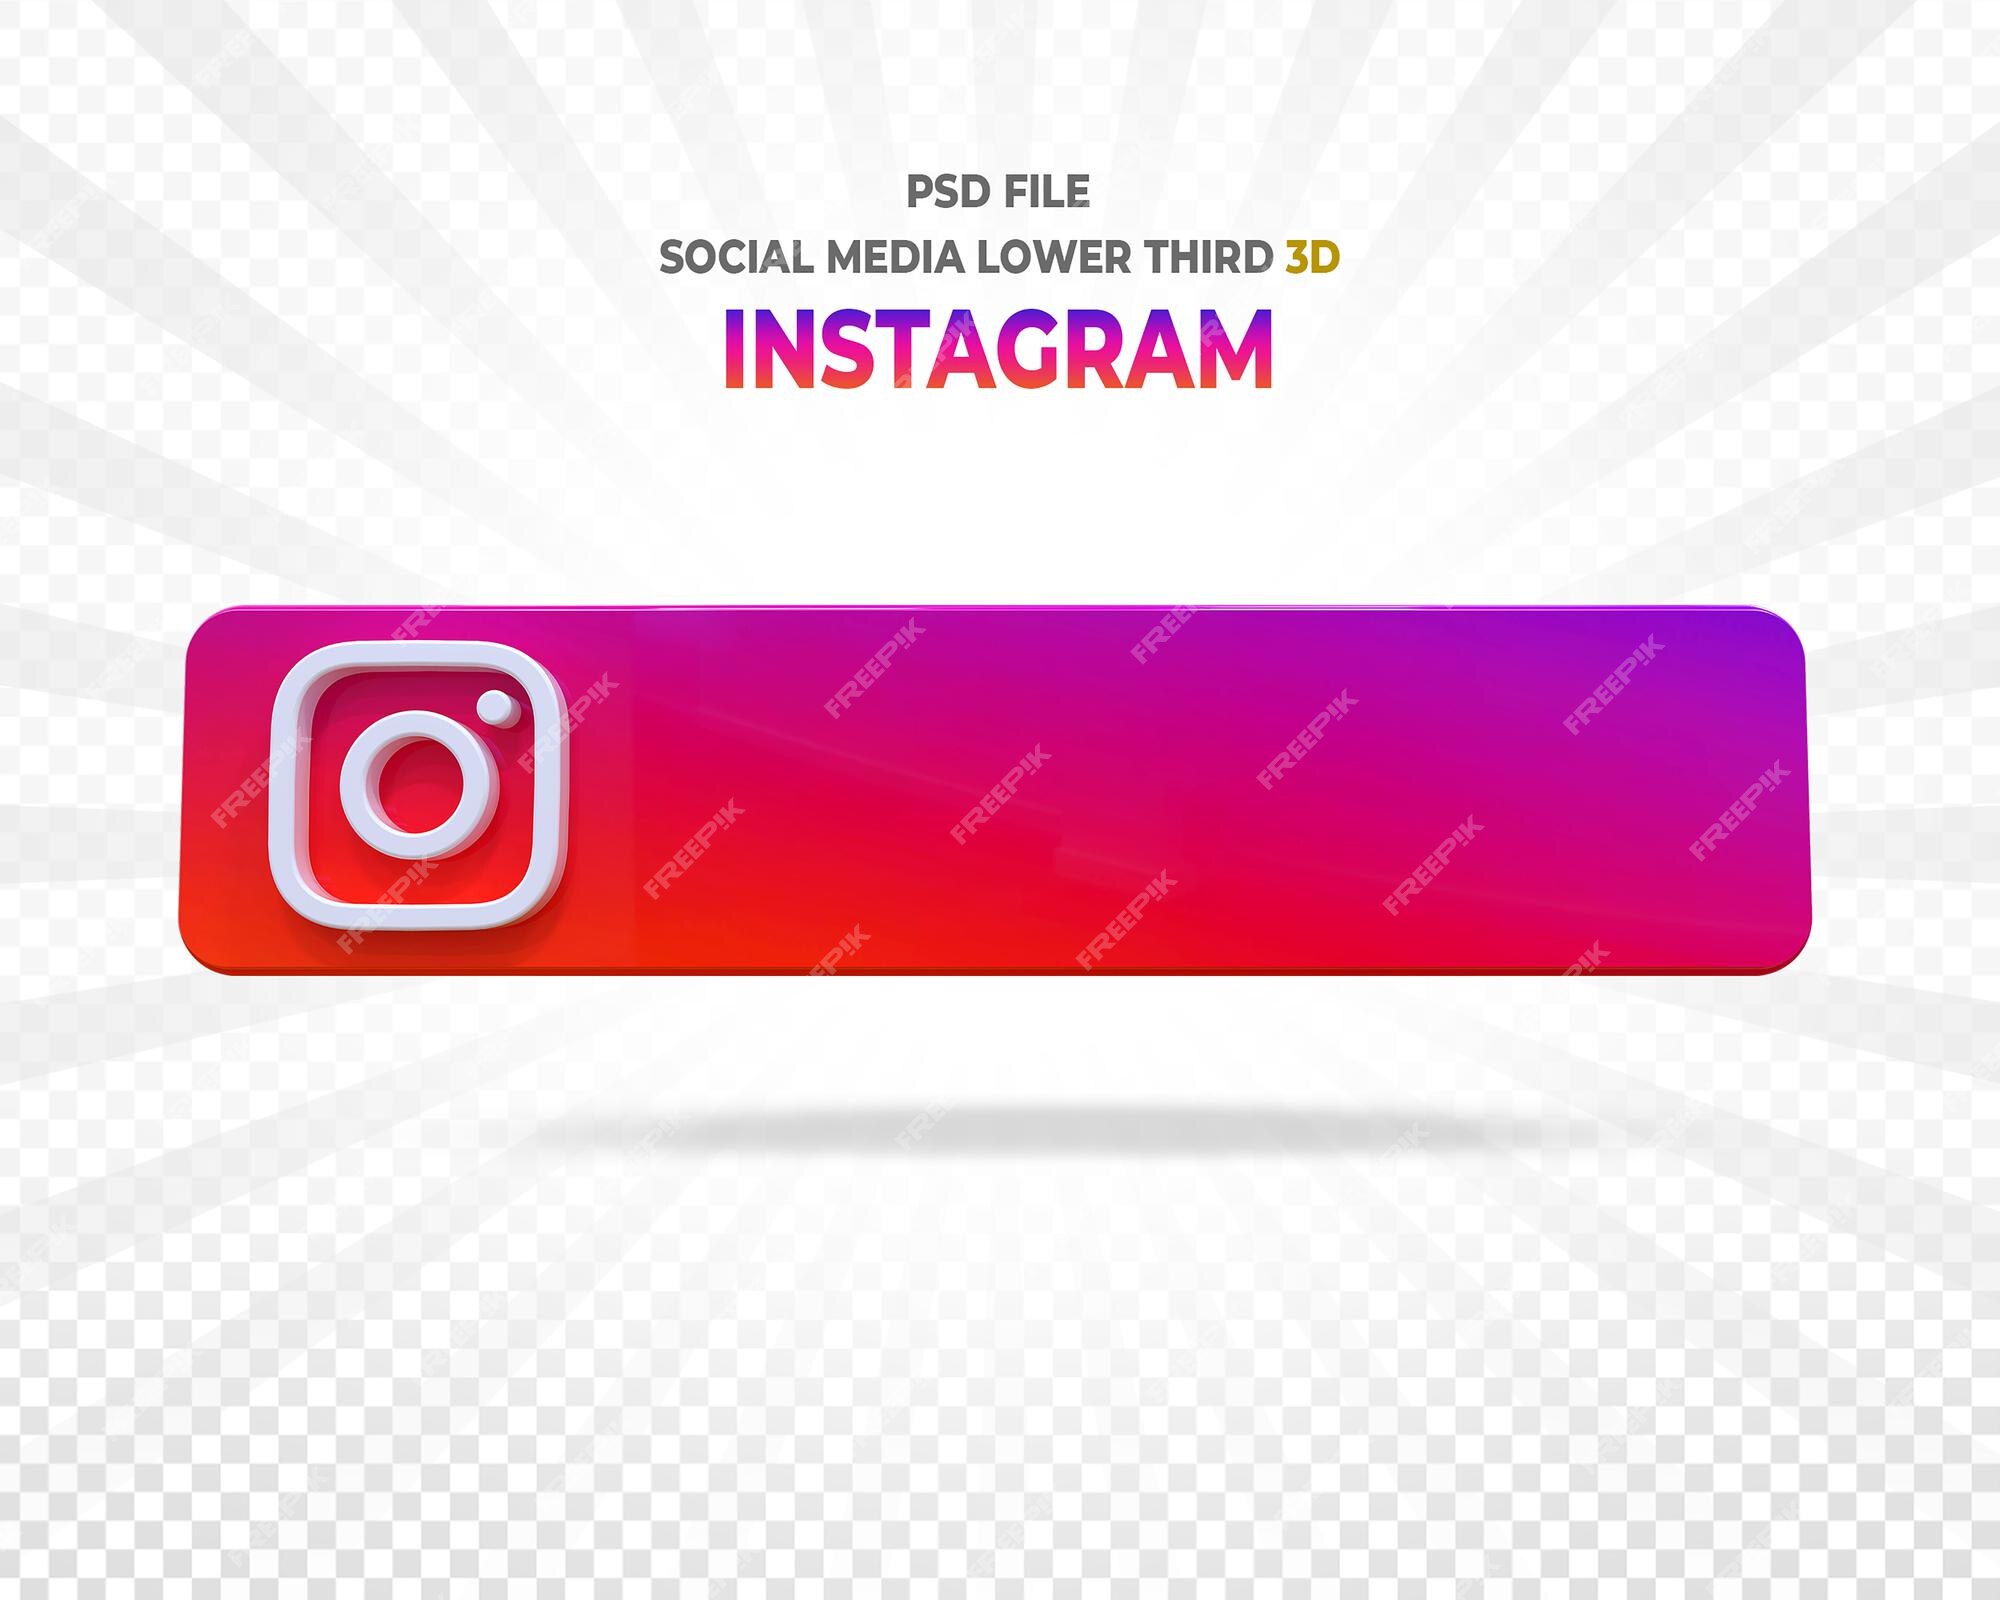 Premium PSD | Instagram social media logos lower third banner 3d render